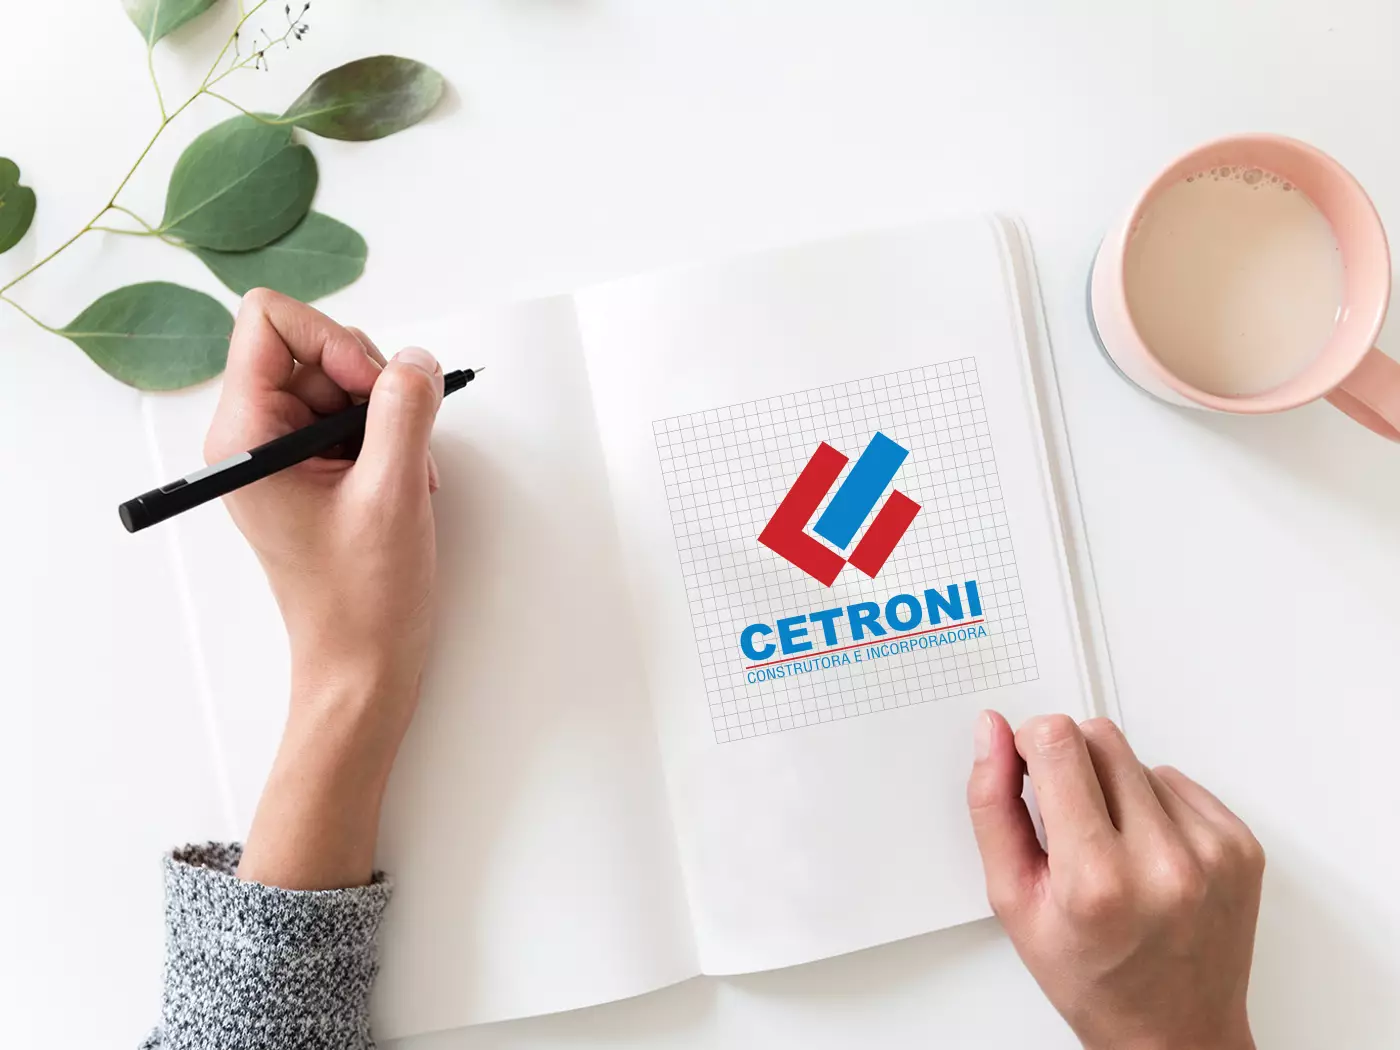 Logomarca Cetroni